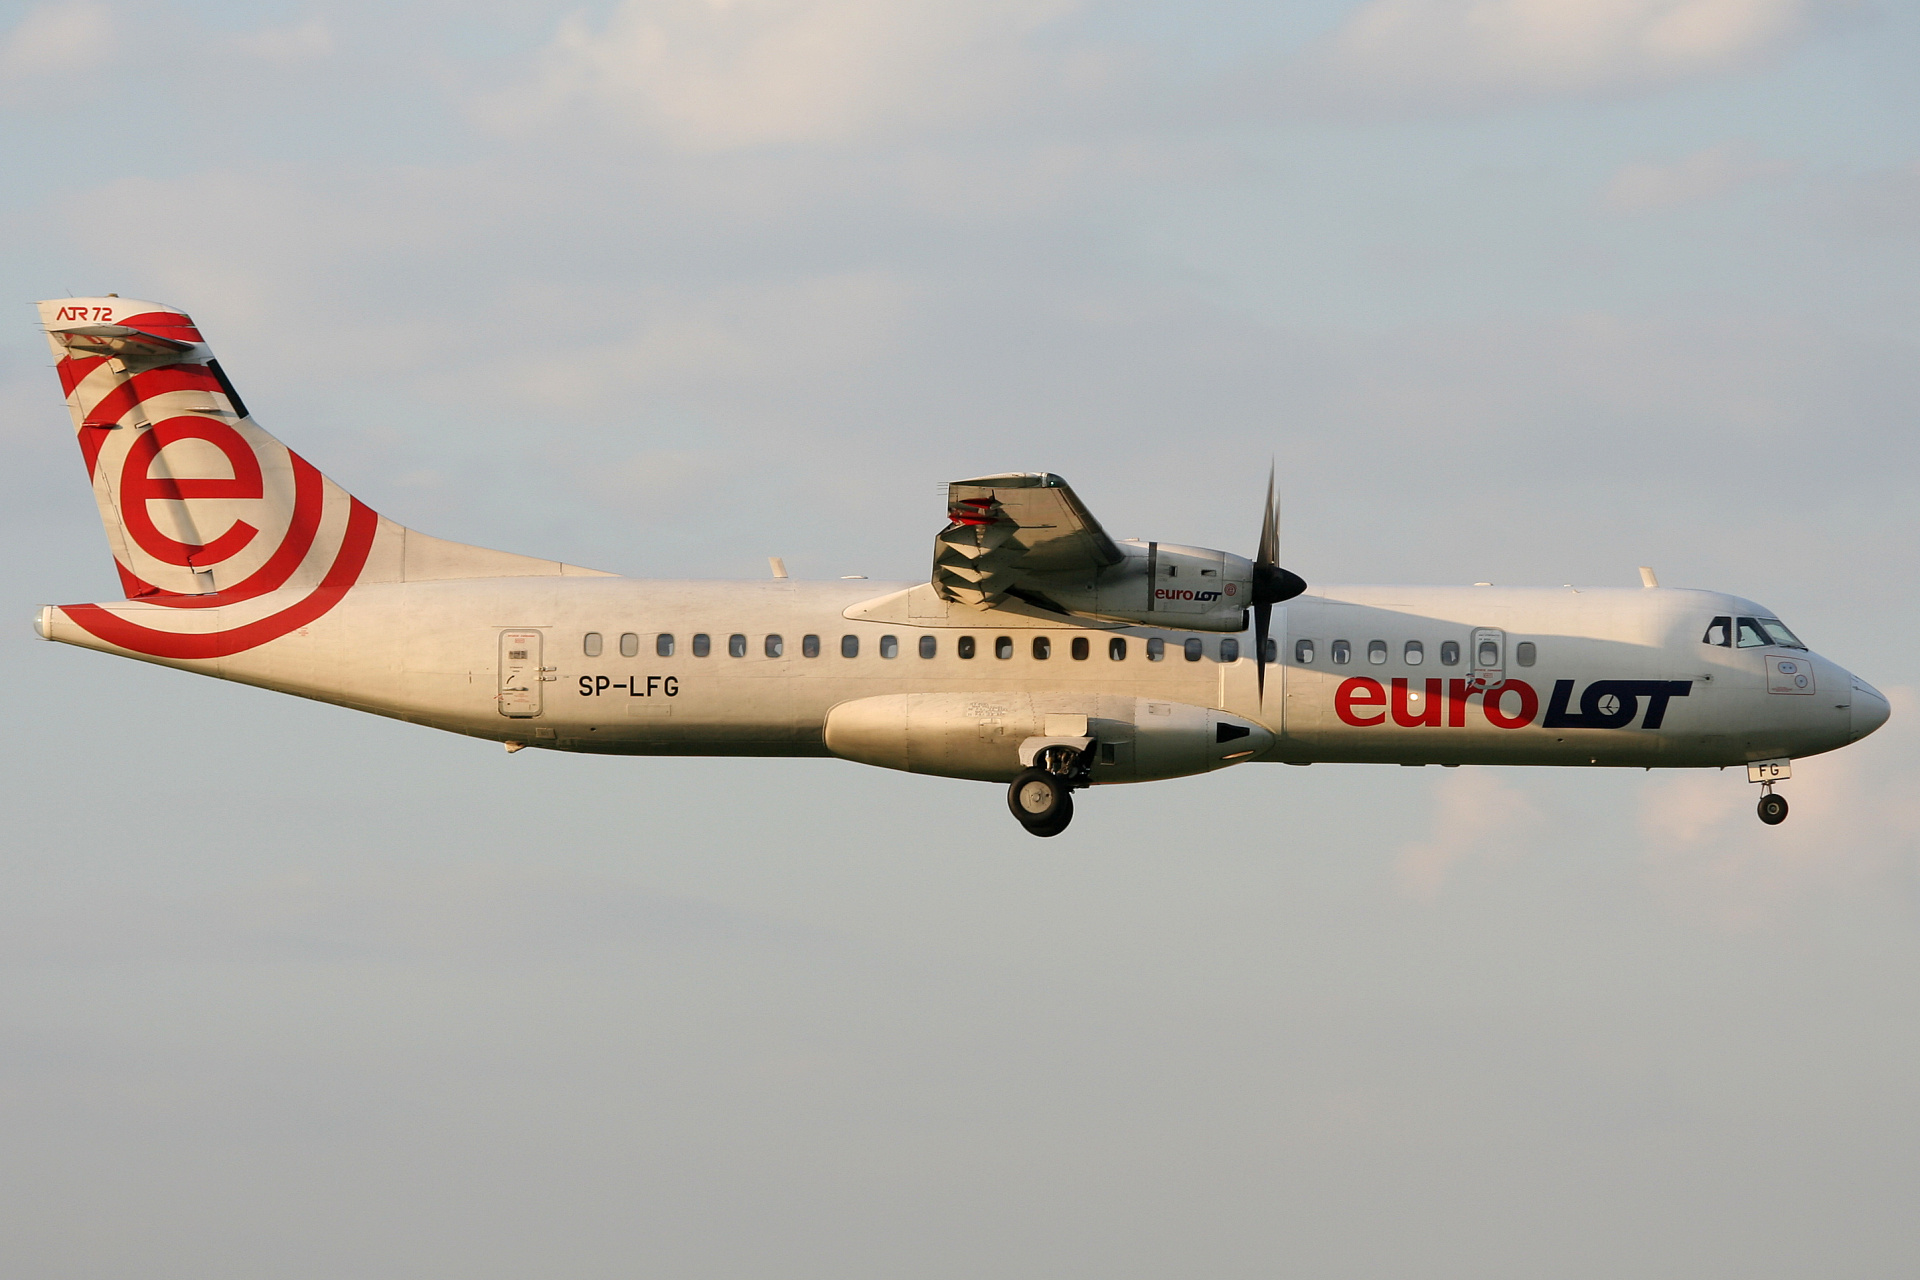 SP-LFG (Aircraft » EPWA Spotting » ATR 72 » EuroLOT)